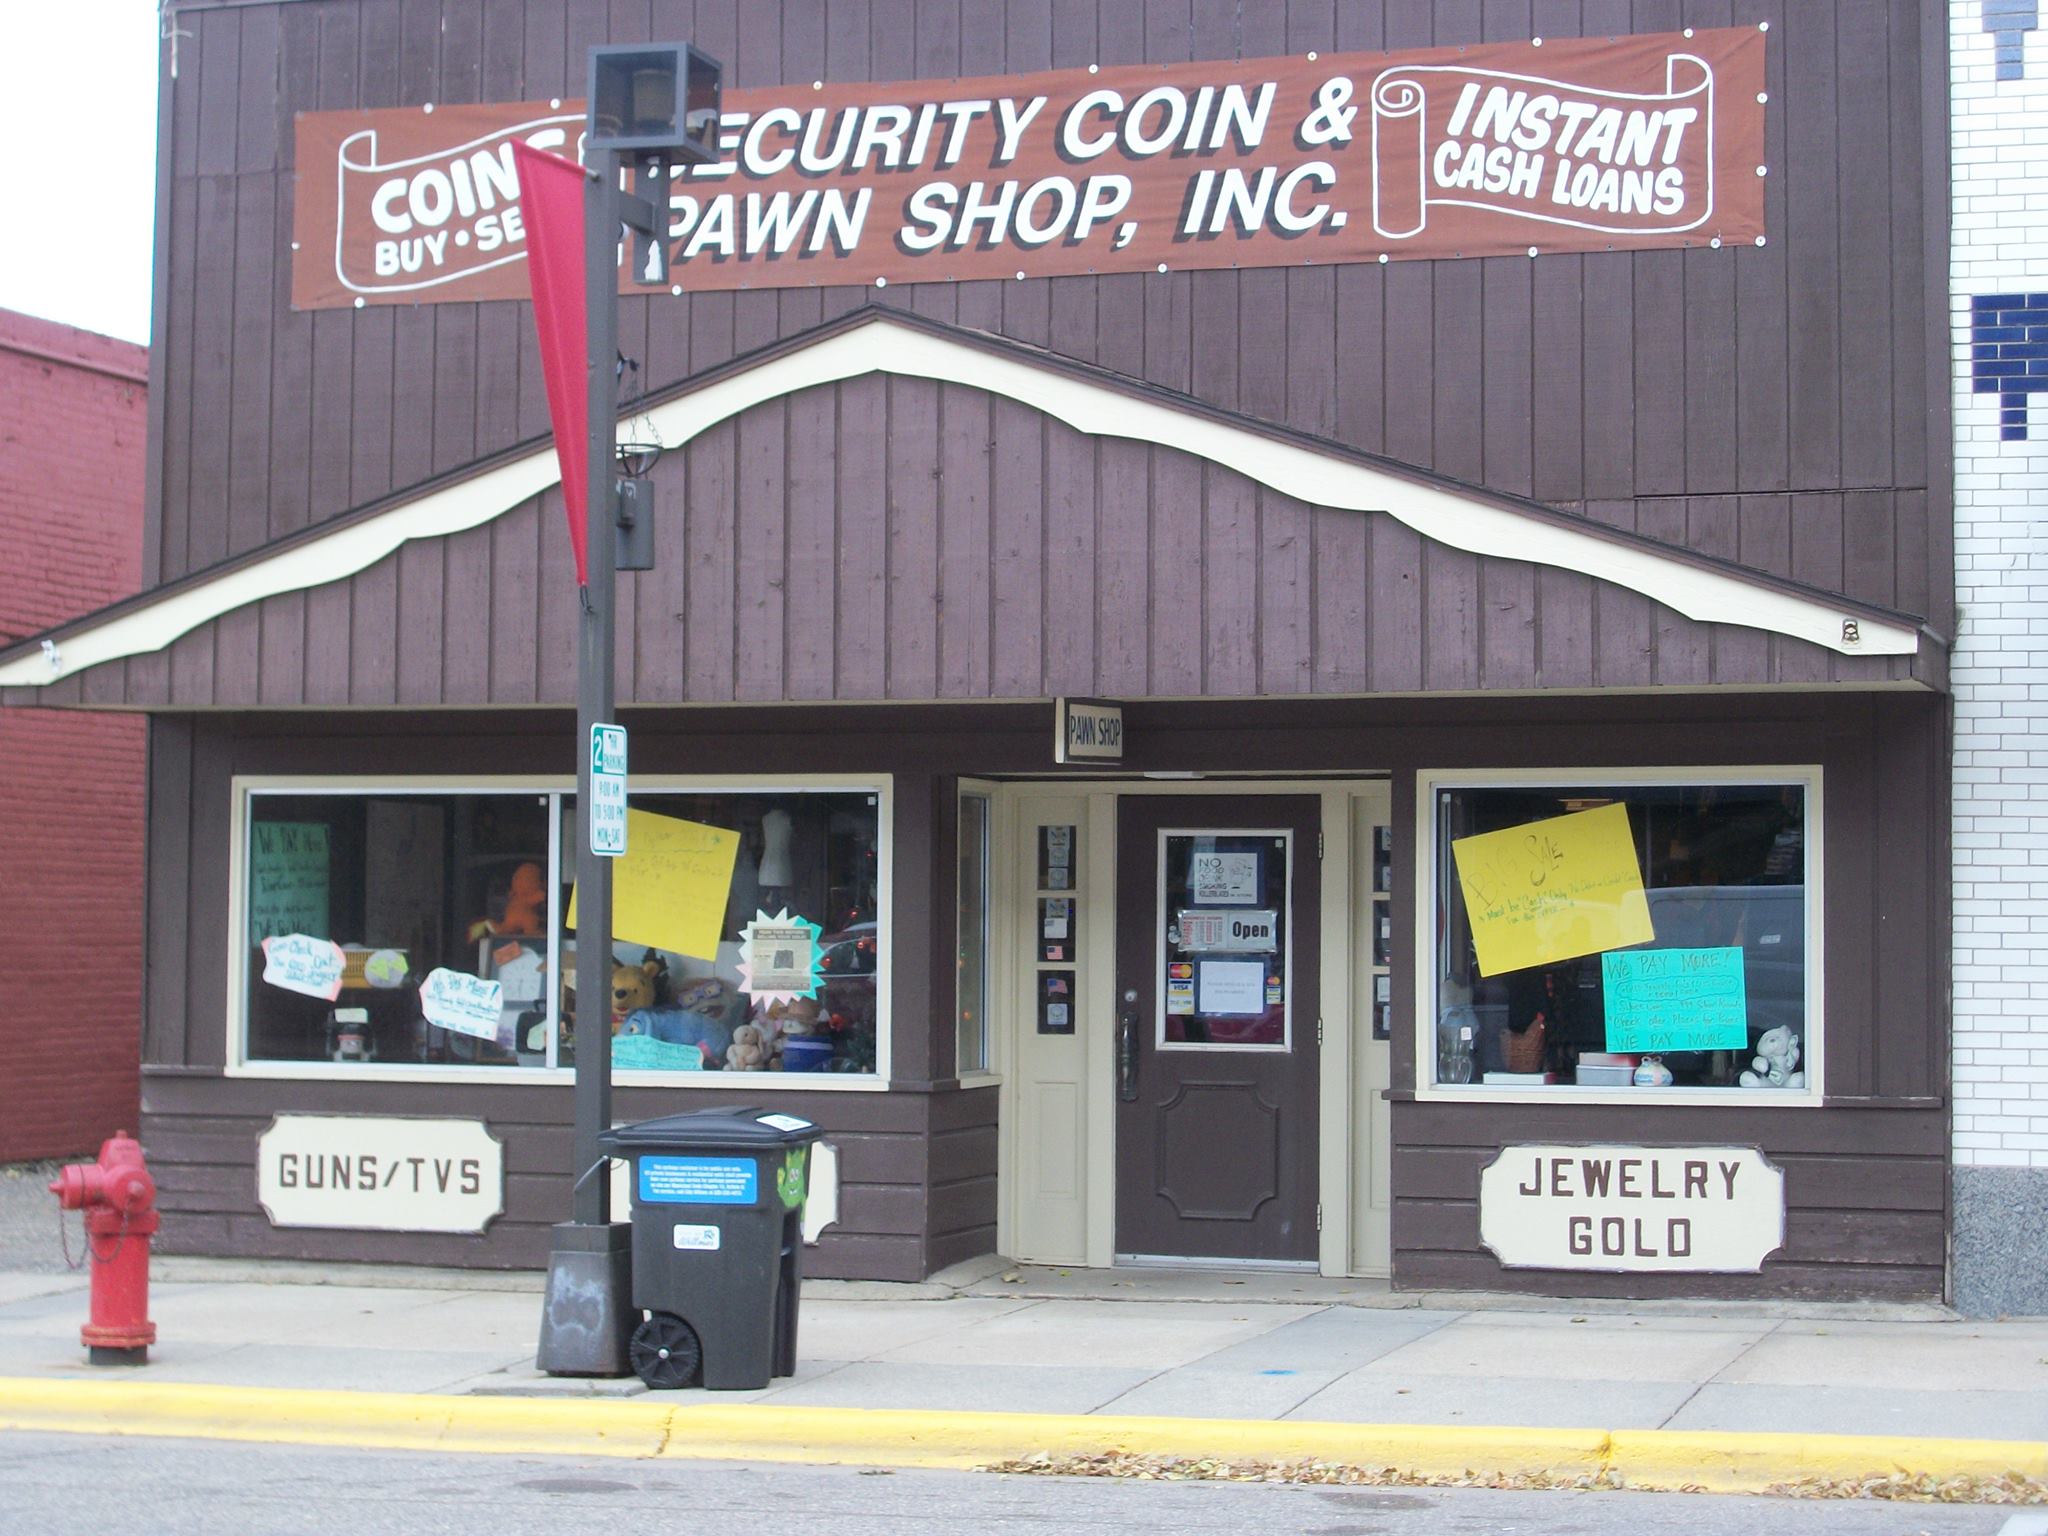 Security Coin & Pawn Shop Inc